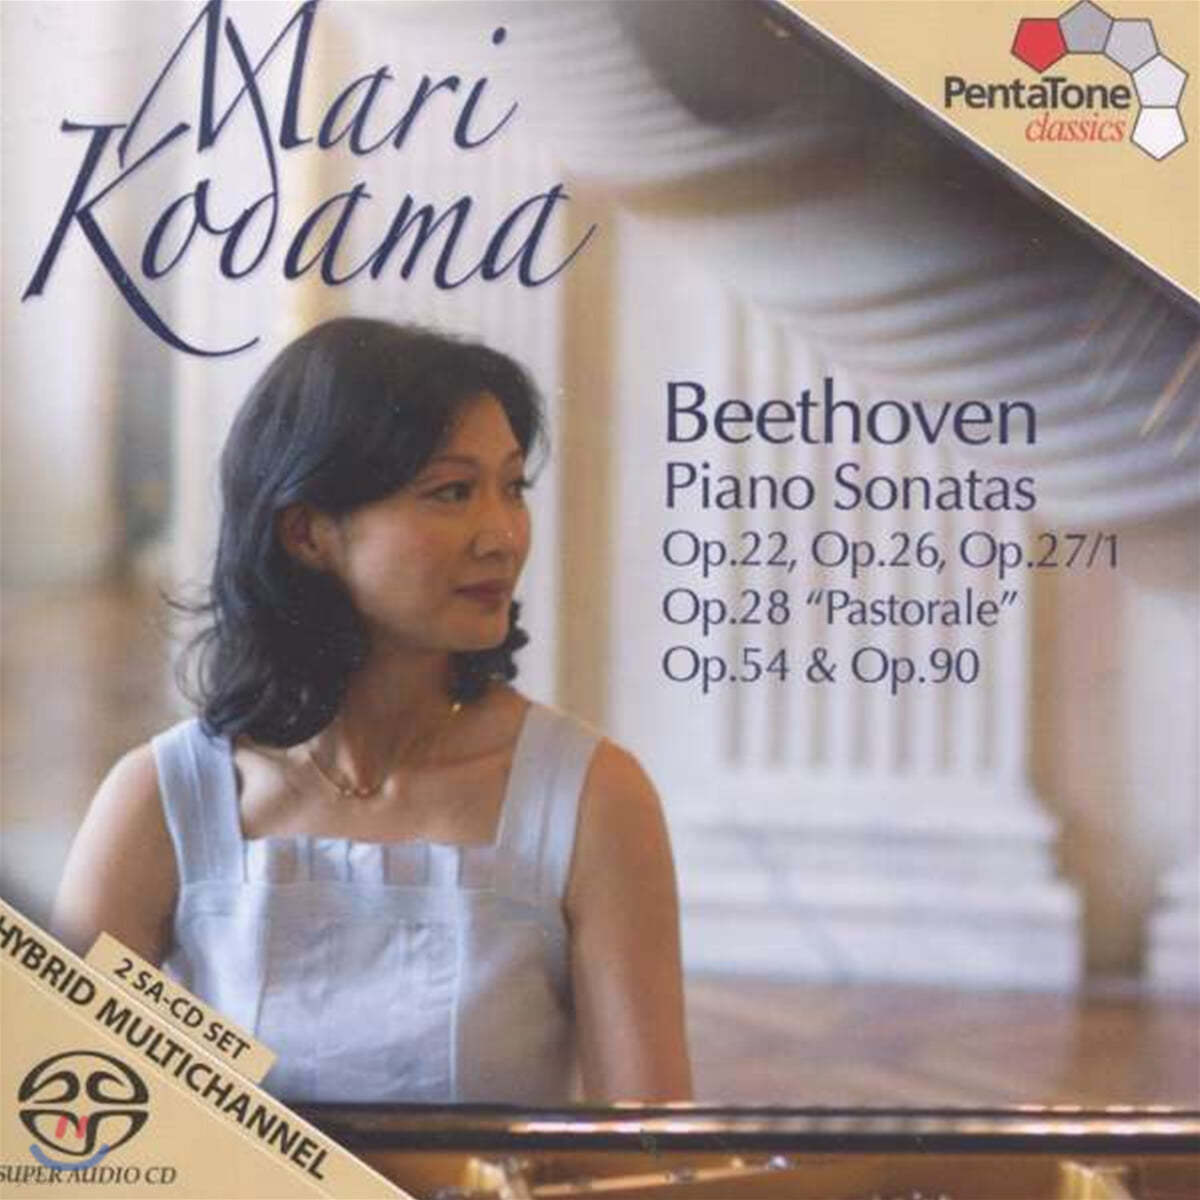 Mari Kodama 베토벤: 피아노 소나타 전곡집 (Beethoven: Piano Sonatas)